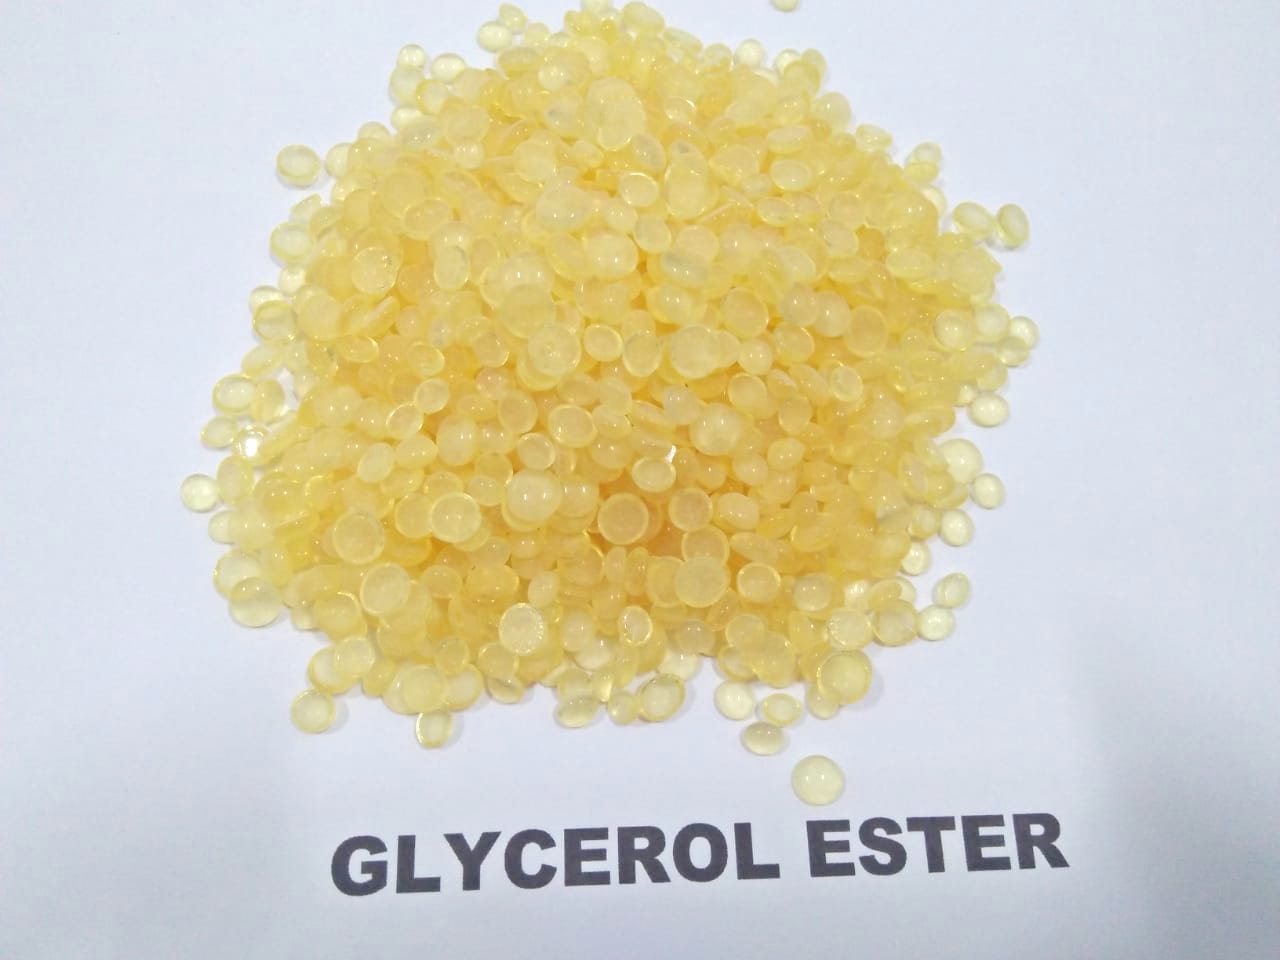 Glycerol Ester of Gum Rosin 85 PM003 Nasco